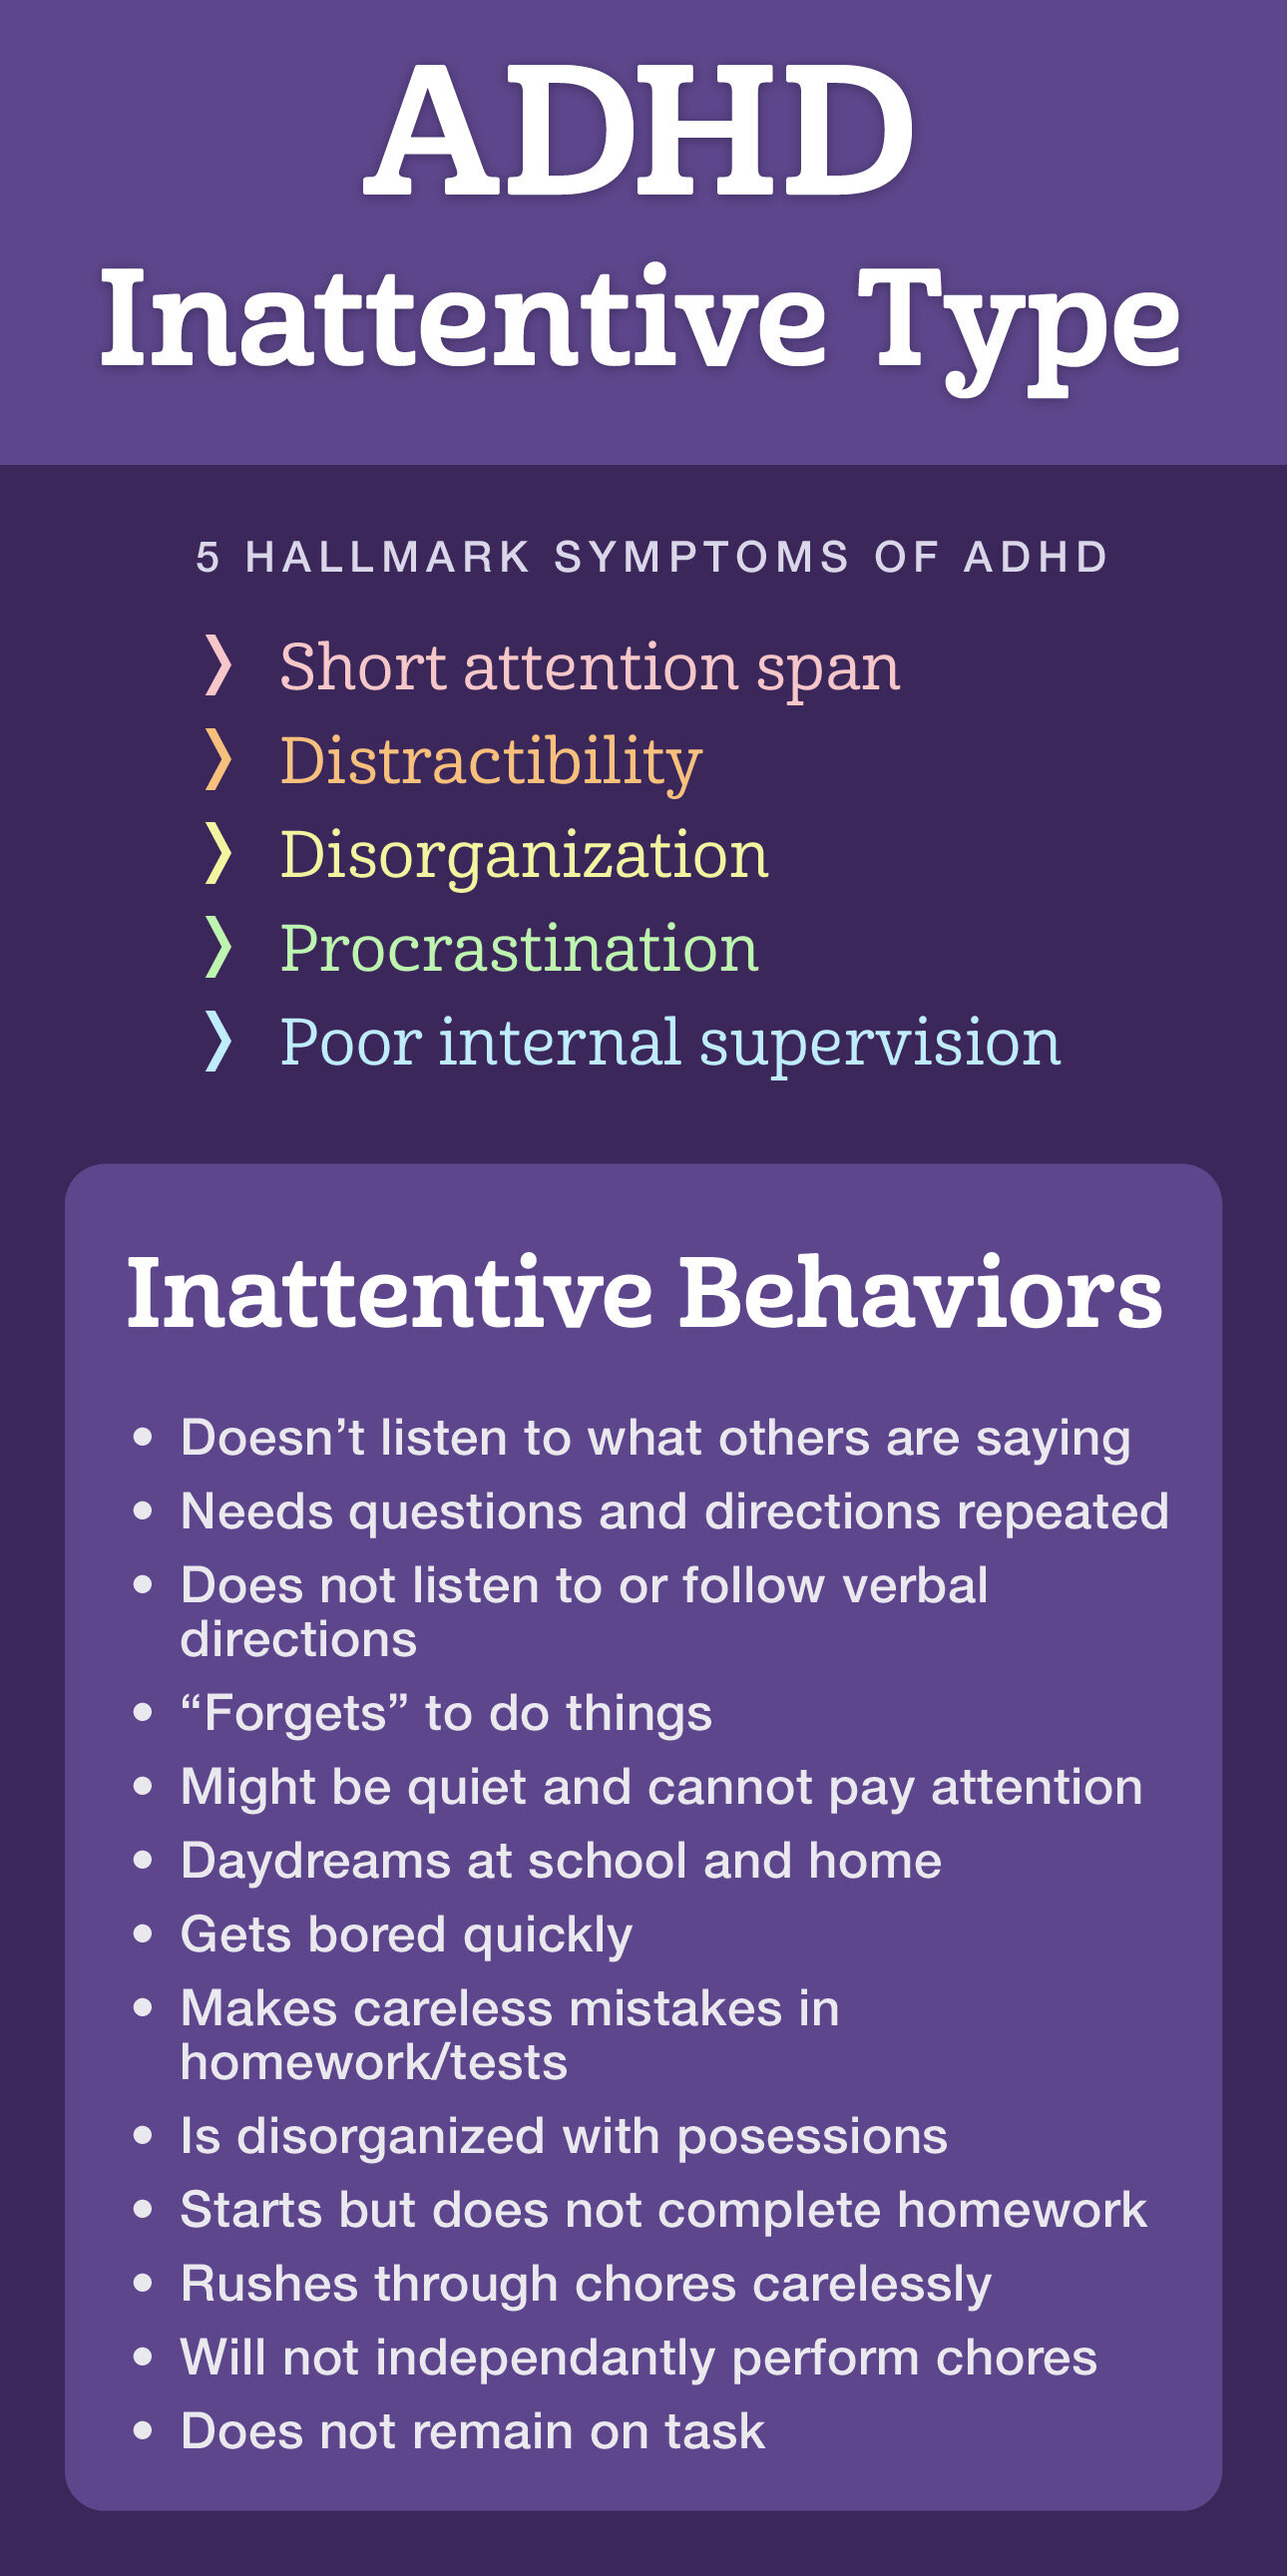 adhd-inattentive-type-symptoms-behaviors-add.png